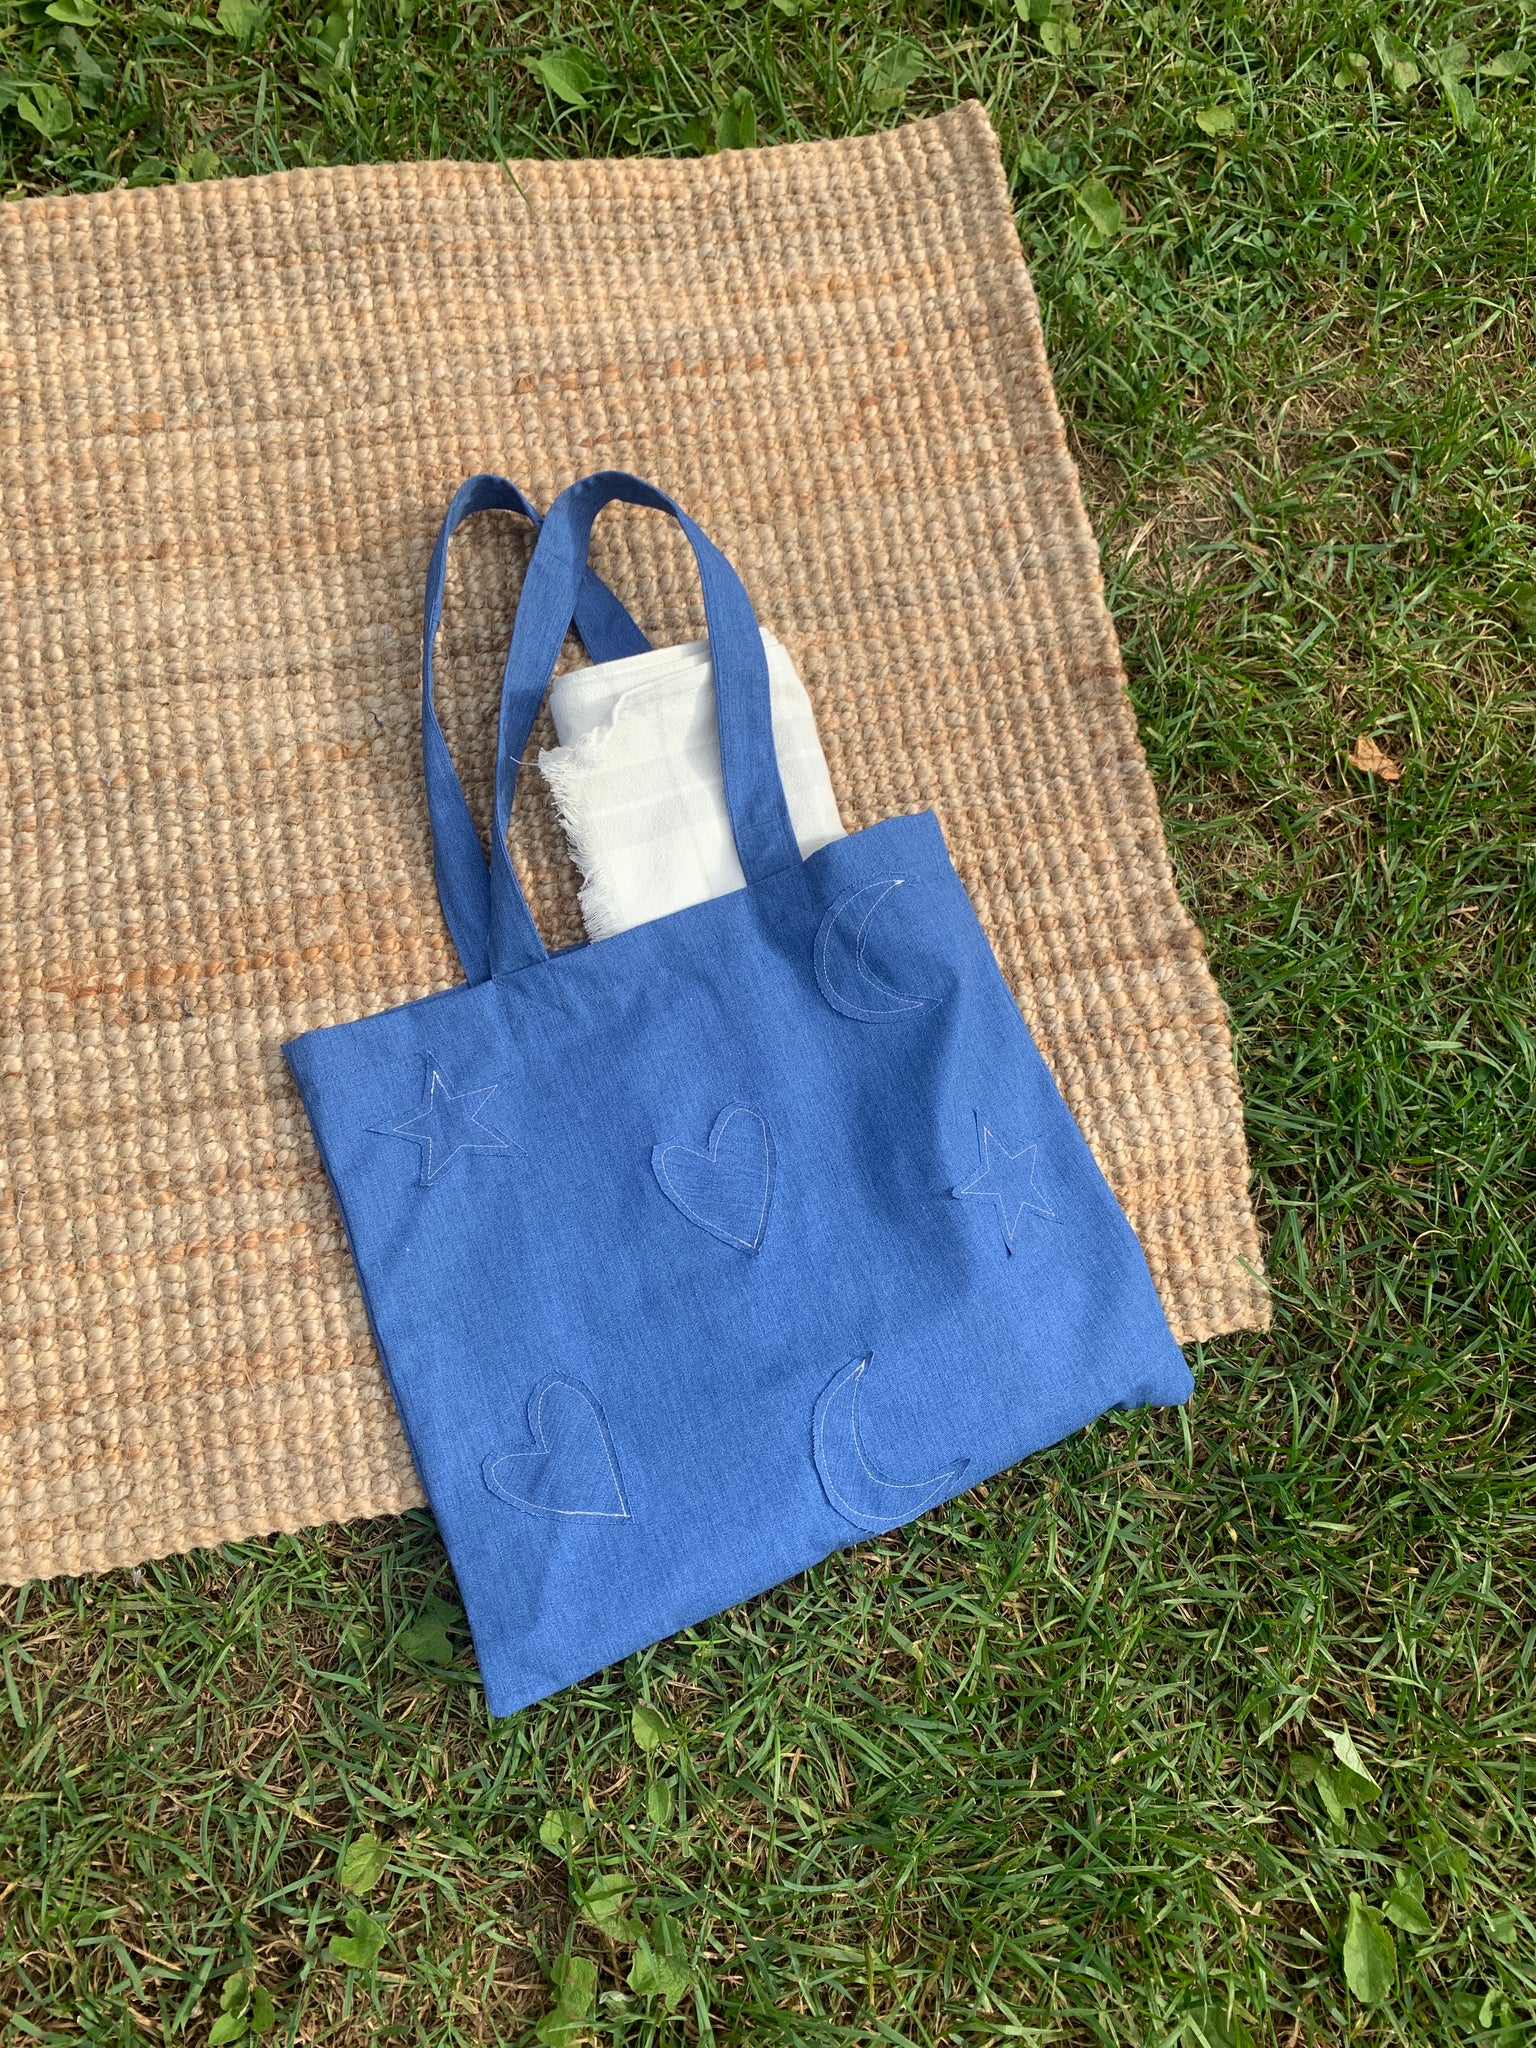 Reversible Shopping Bag Tutorial & Pattern ~ DIY Tutorial Ideas!